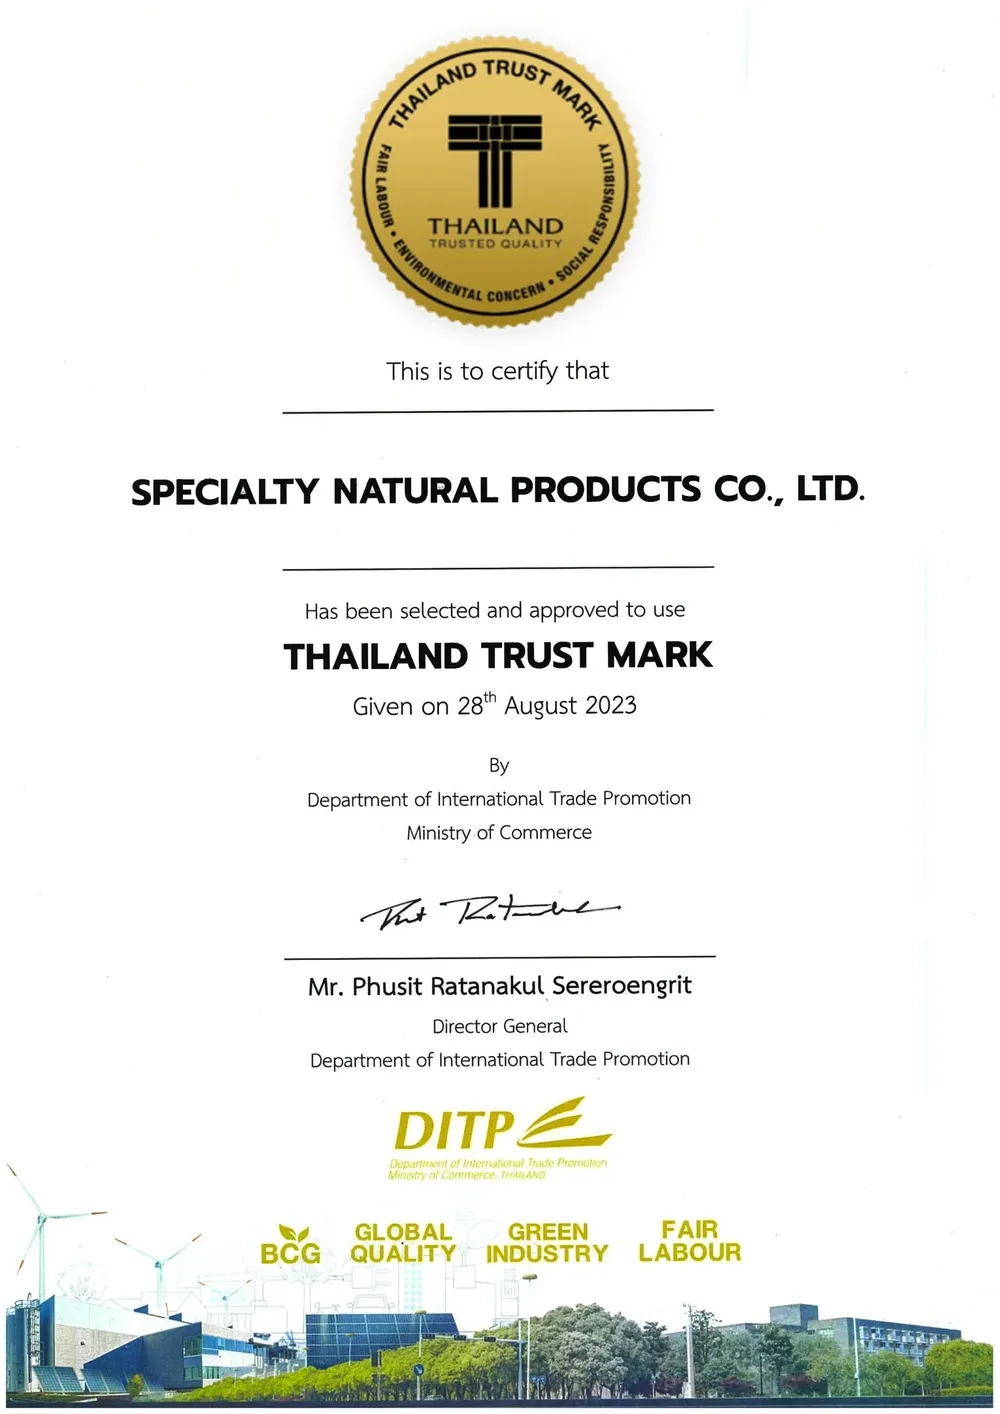 Thailand-TrustMark